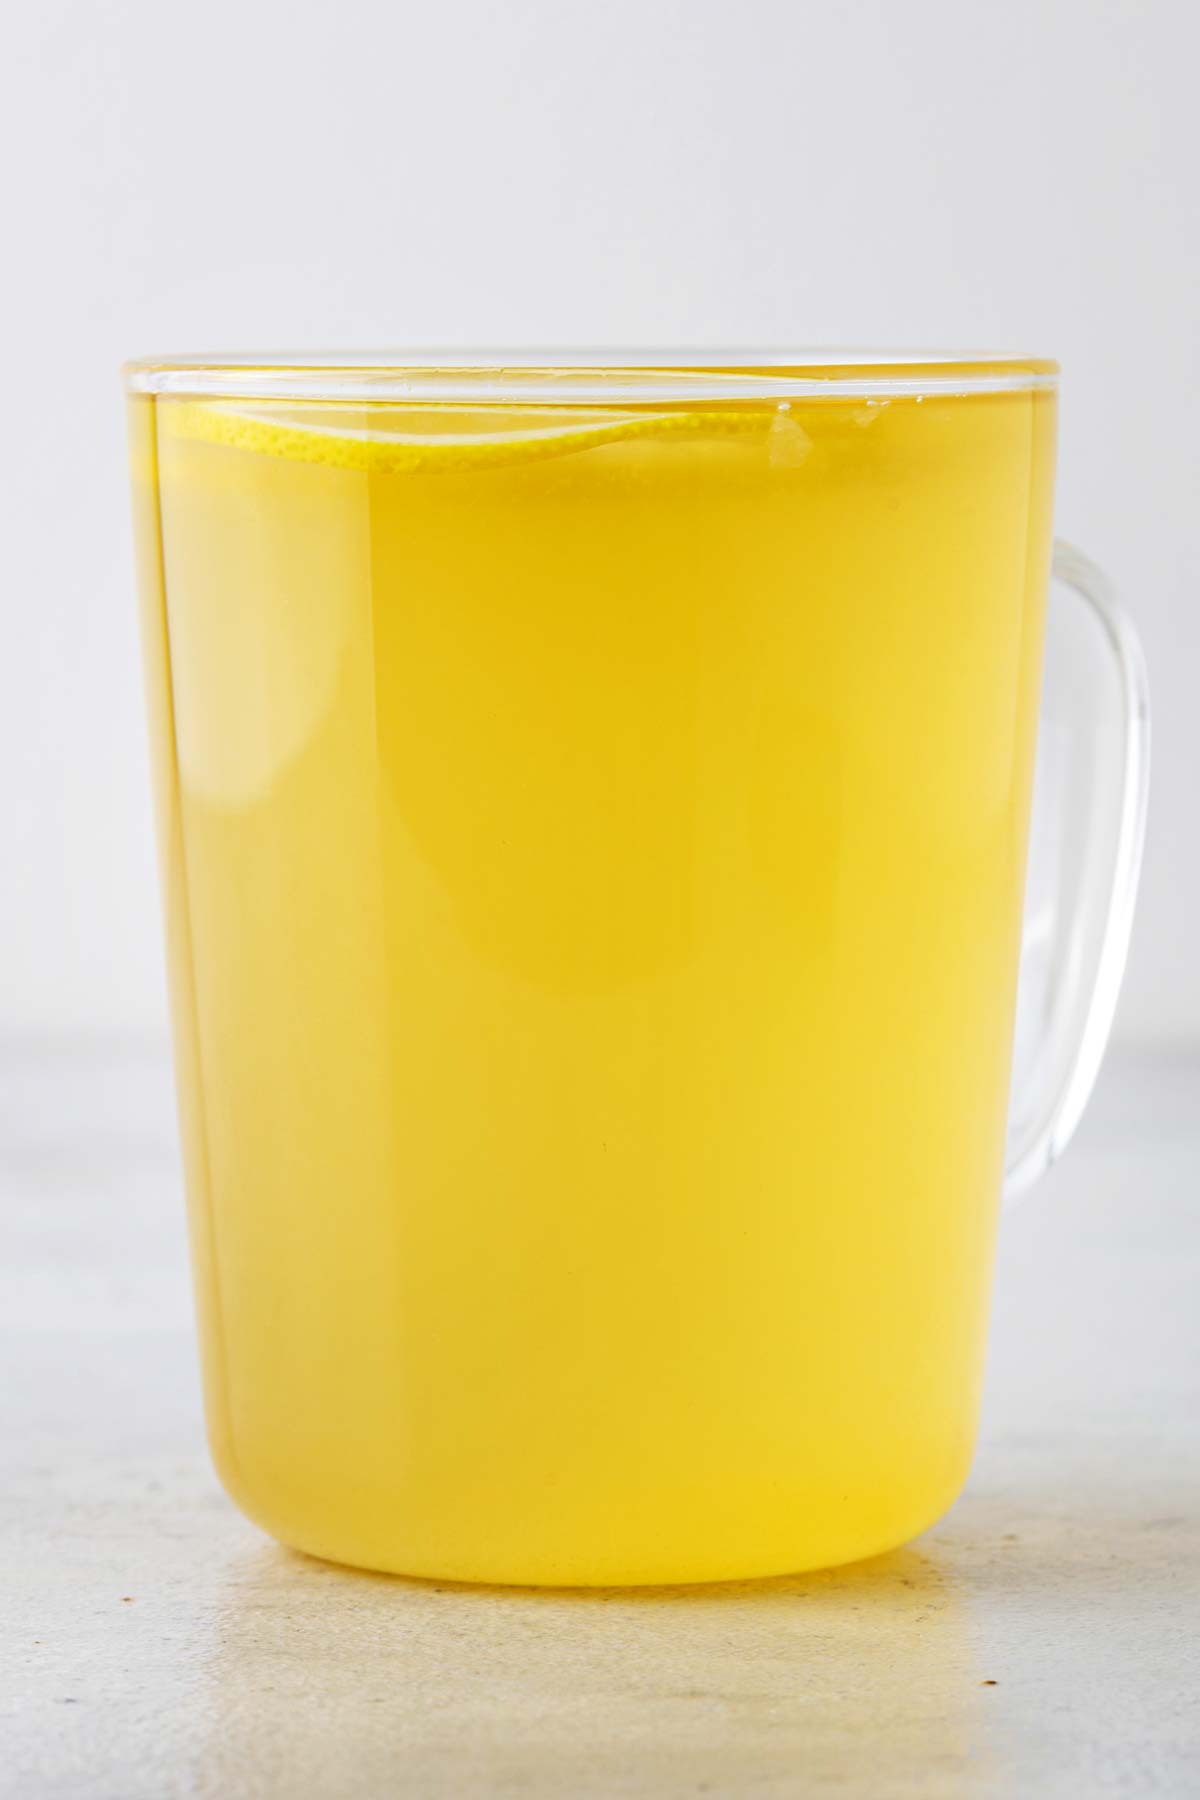 Lemon tea in a glass mug.